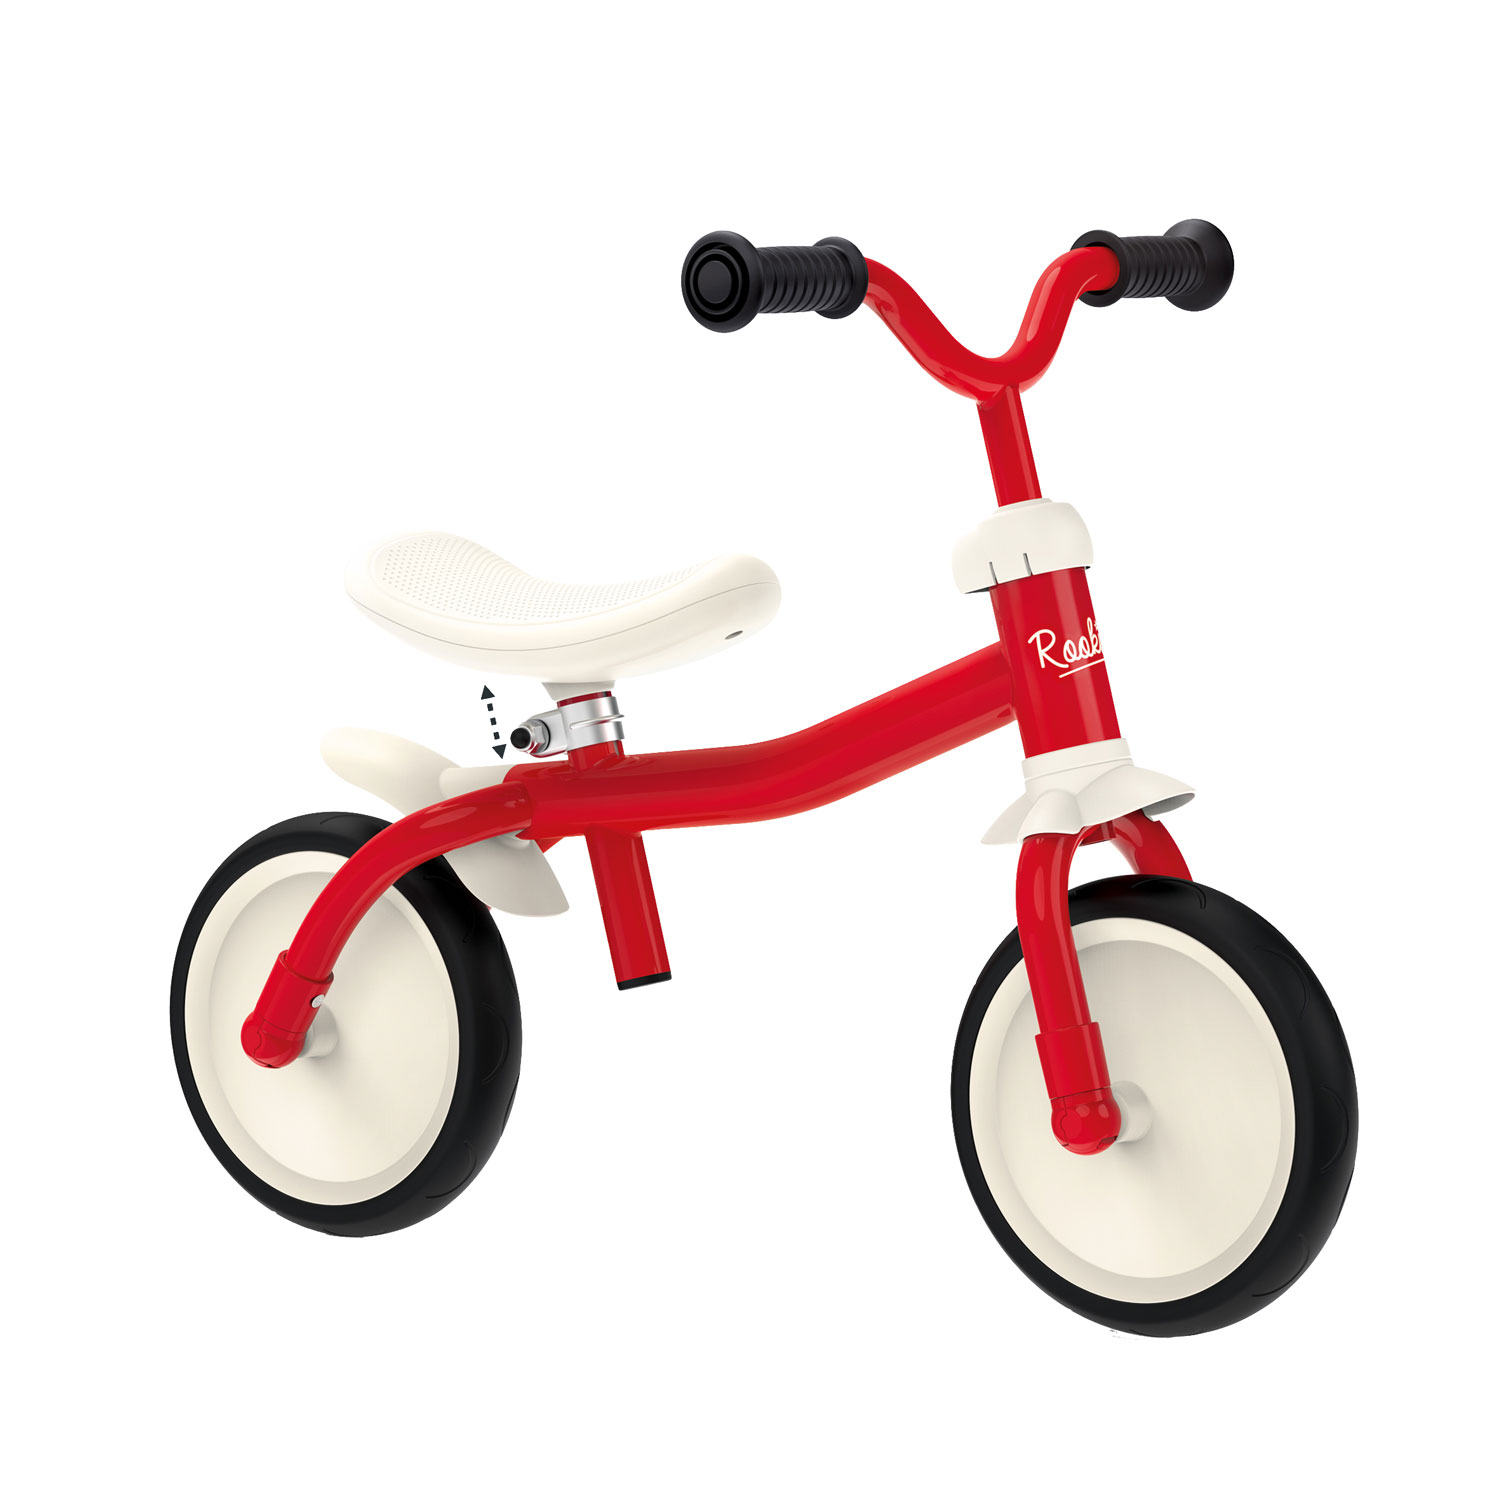 In tegenspraak gans Potentieel Smoby Rookie Balance Bike Loopfiets | Thimble Toys